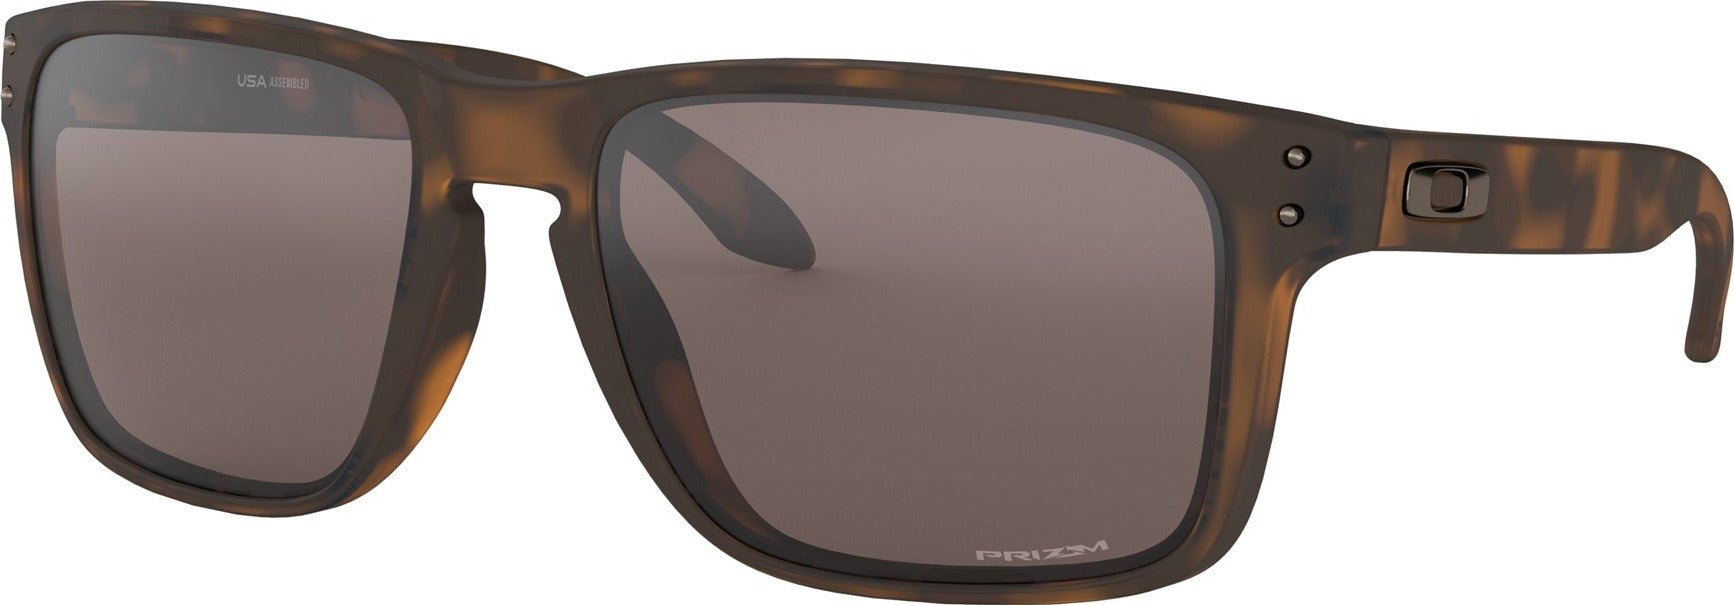 Oakley Holbrook XL Sunglasses - Matte Brown Tortoise - Prizm Black Iridium  Lens | Altitude Sports